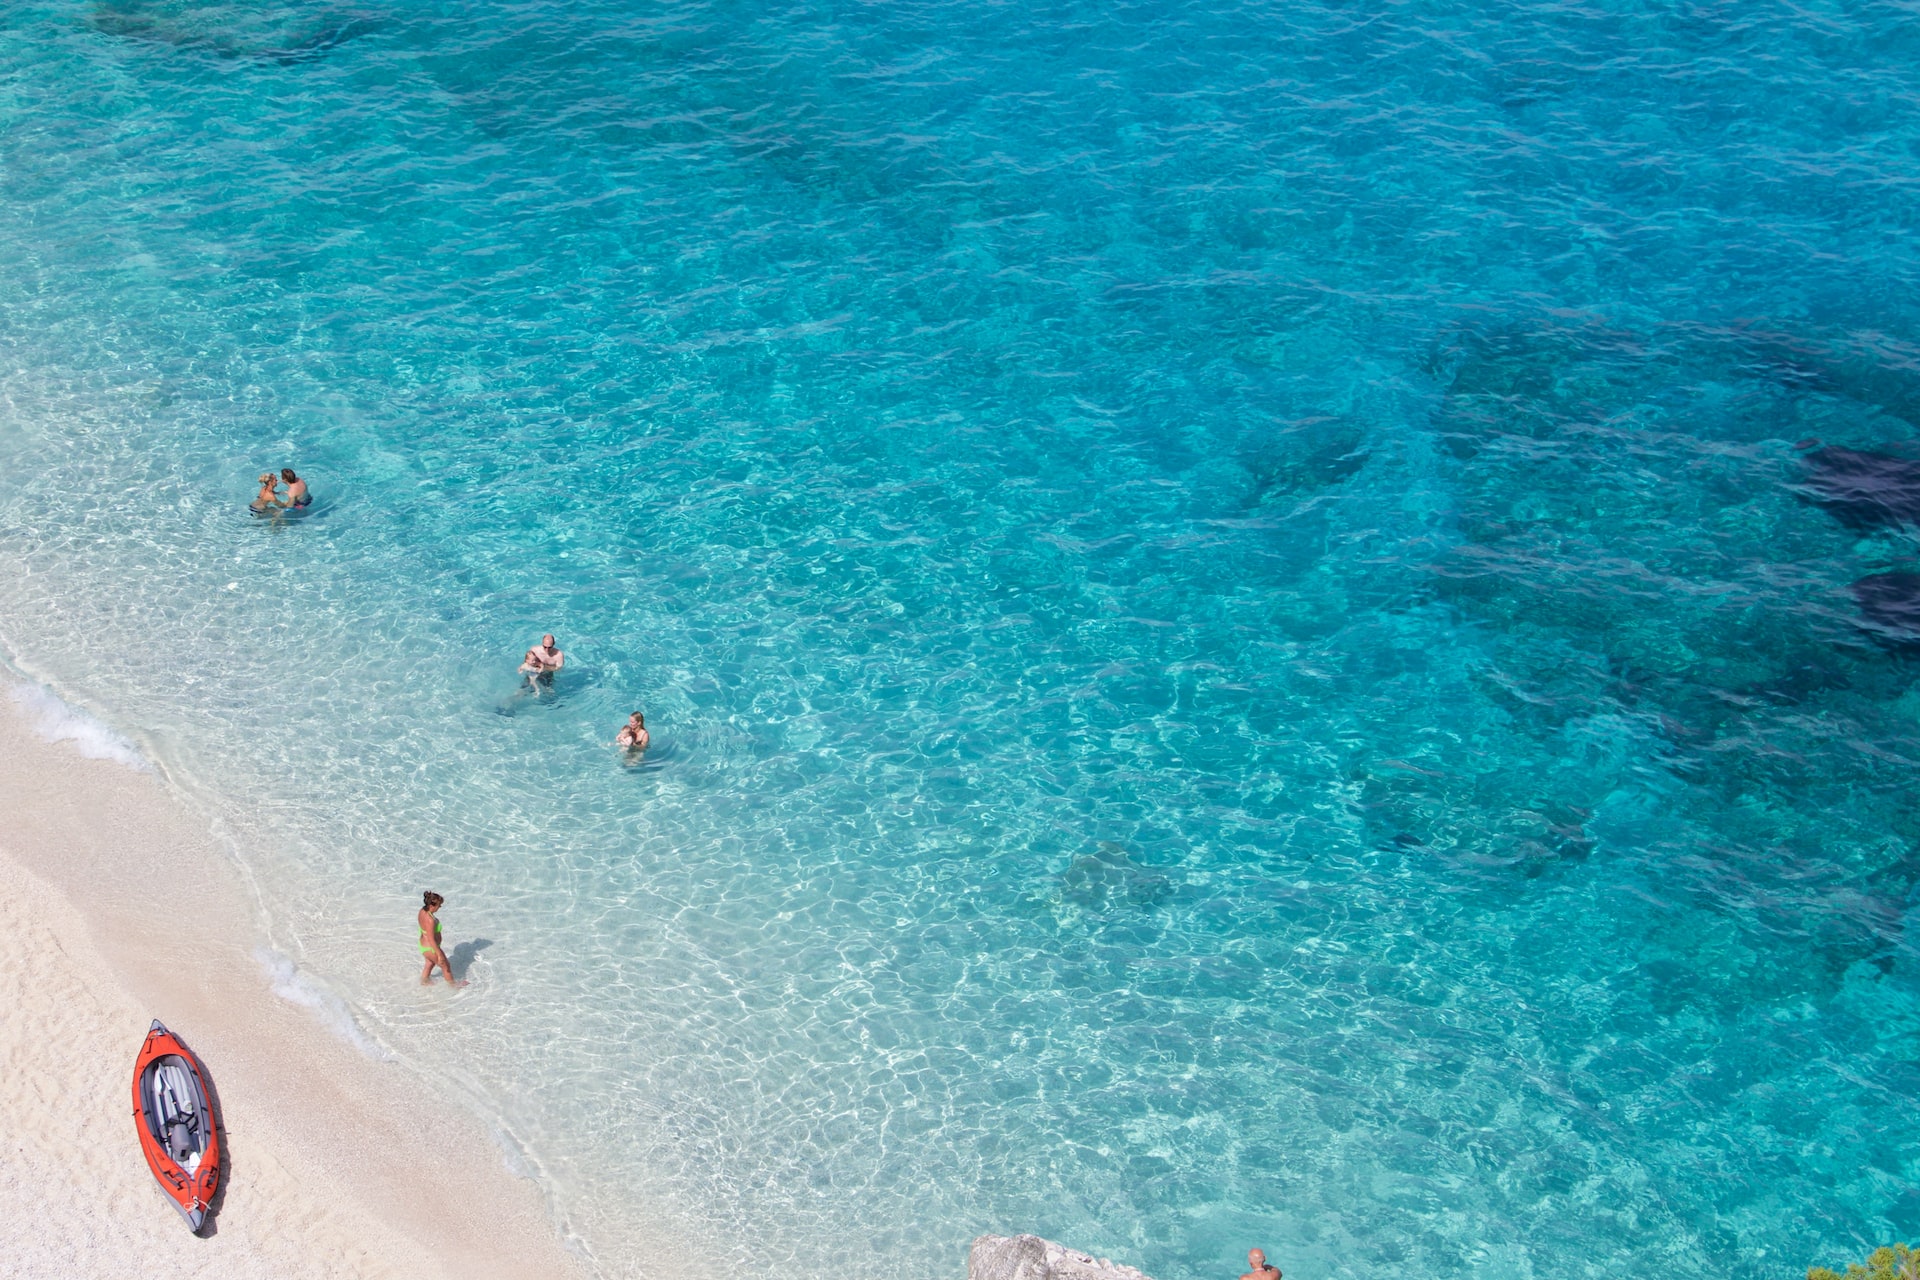 Breathtaking view on Mediterranean sea beach on Liguria region in